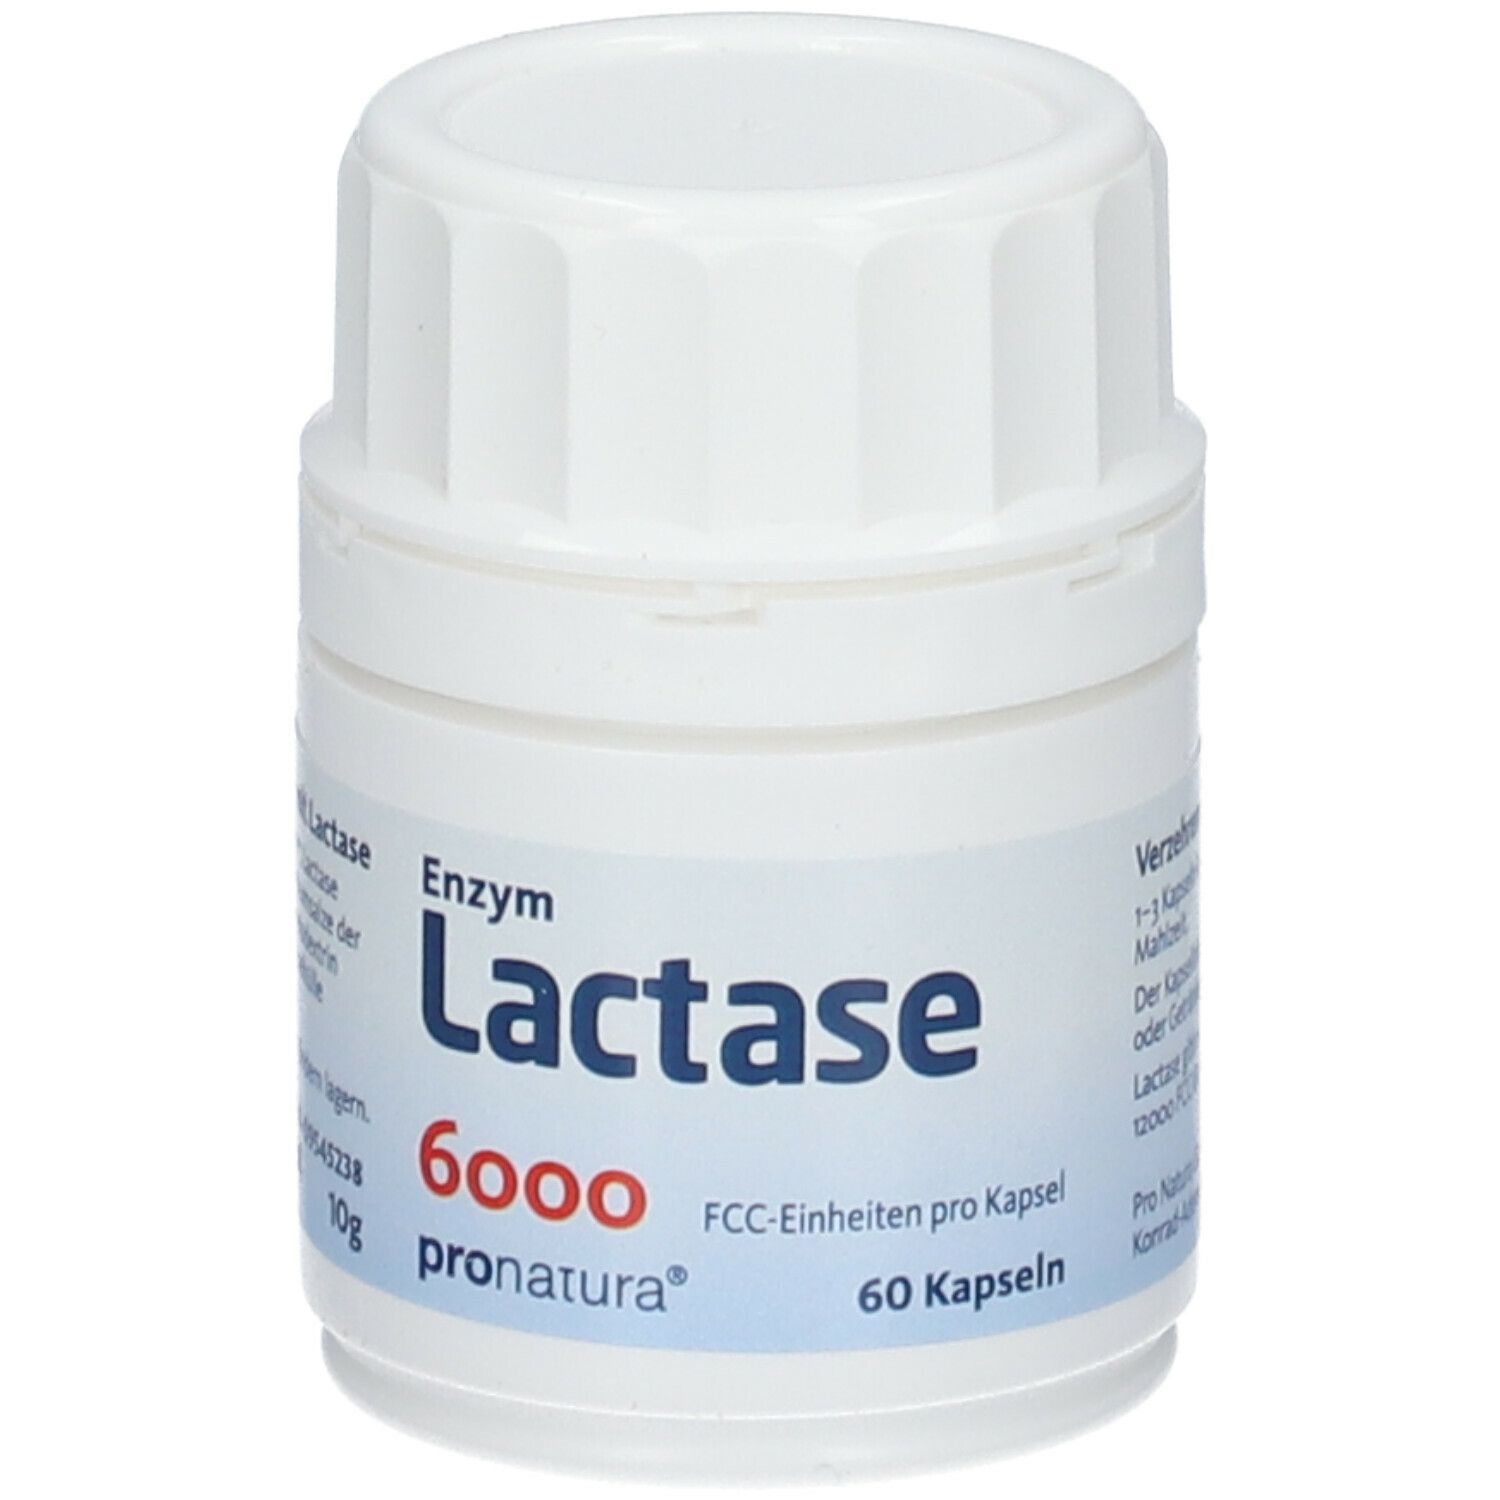 Image of Enzym Lactase 6000 FCC Kapseln